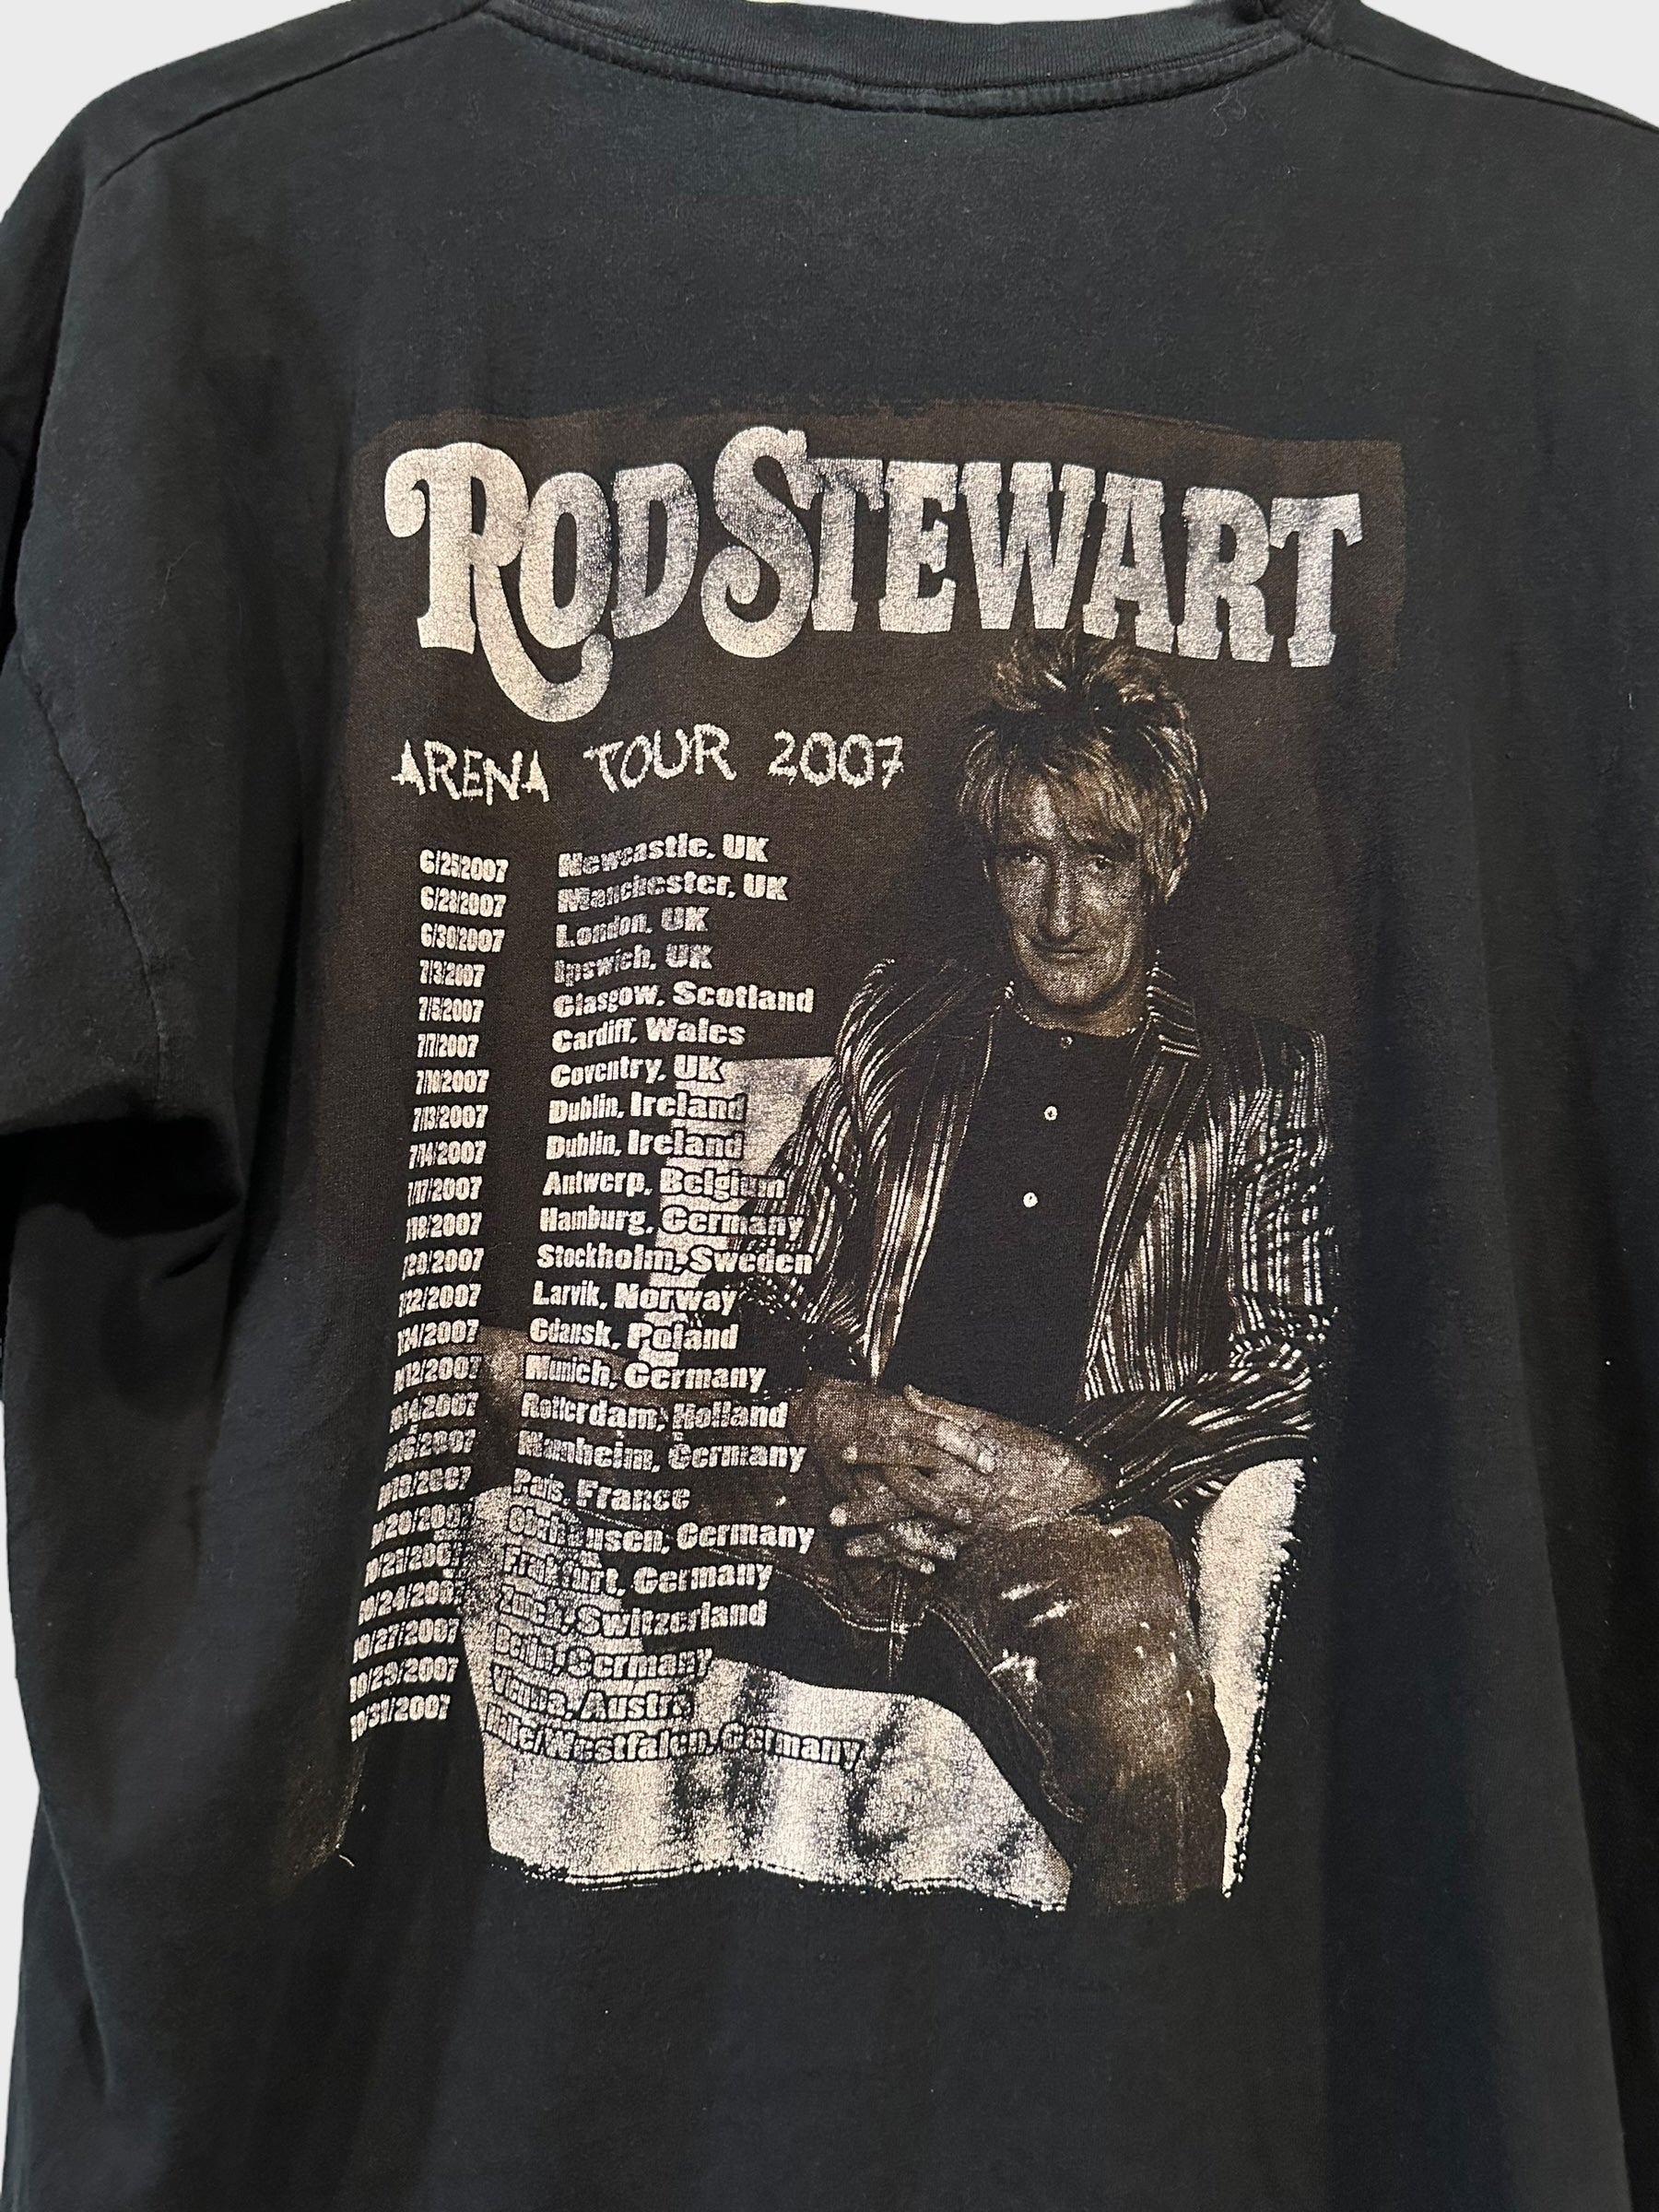 Rod Stewart 2007 Tour Tshirt